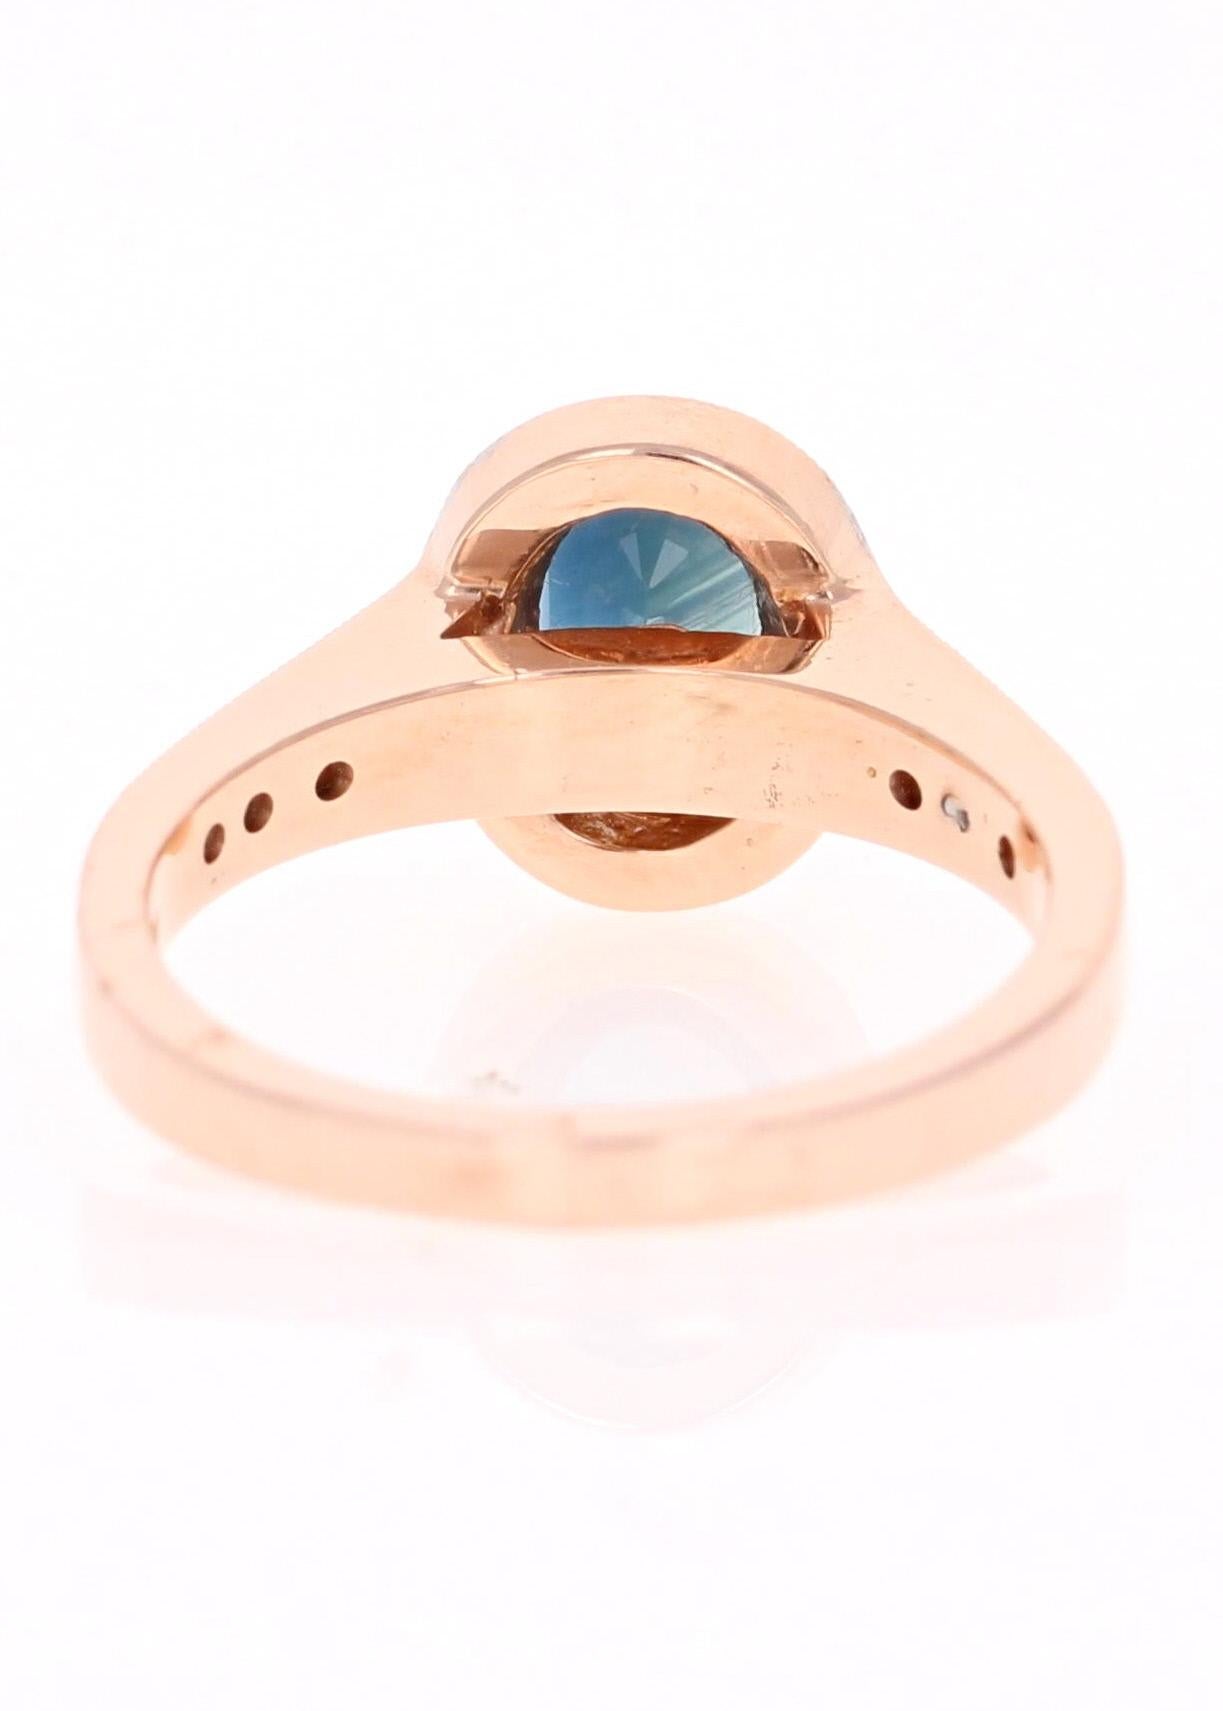 Oval Cut 1.75 Carat Sapphire Diamond 14 Karat Rose Gold Engagement Ring